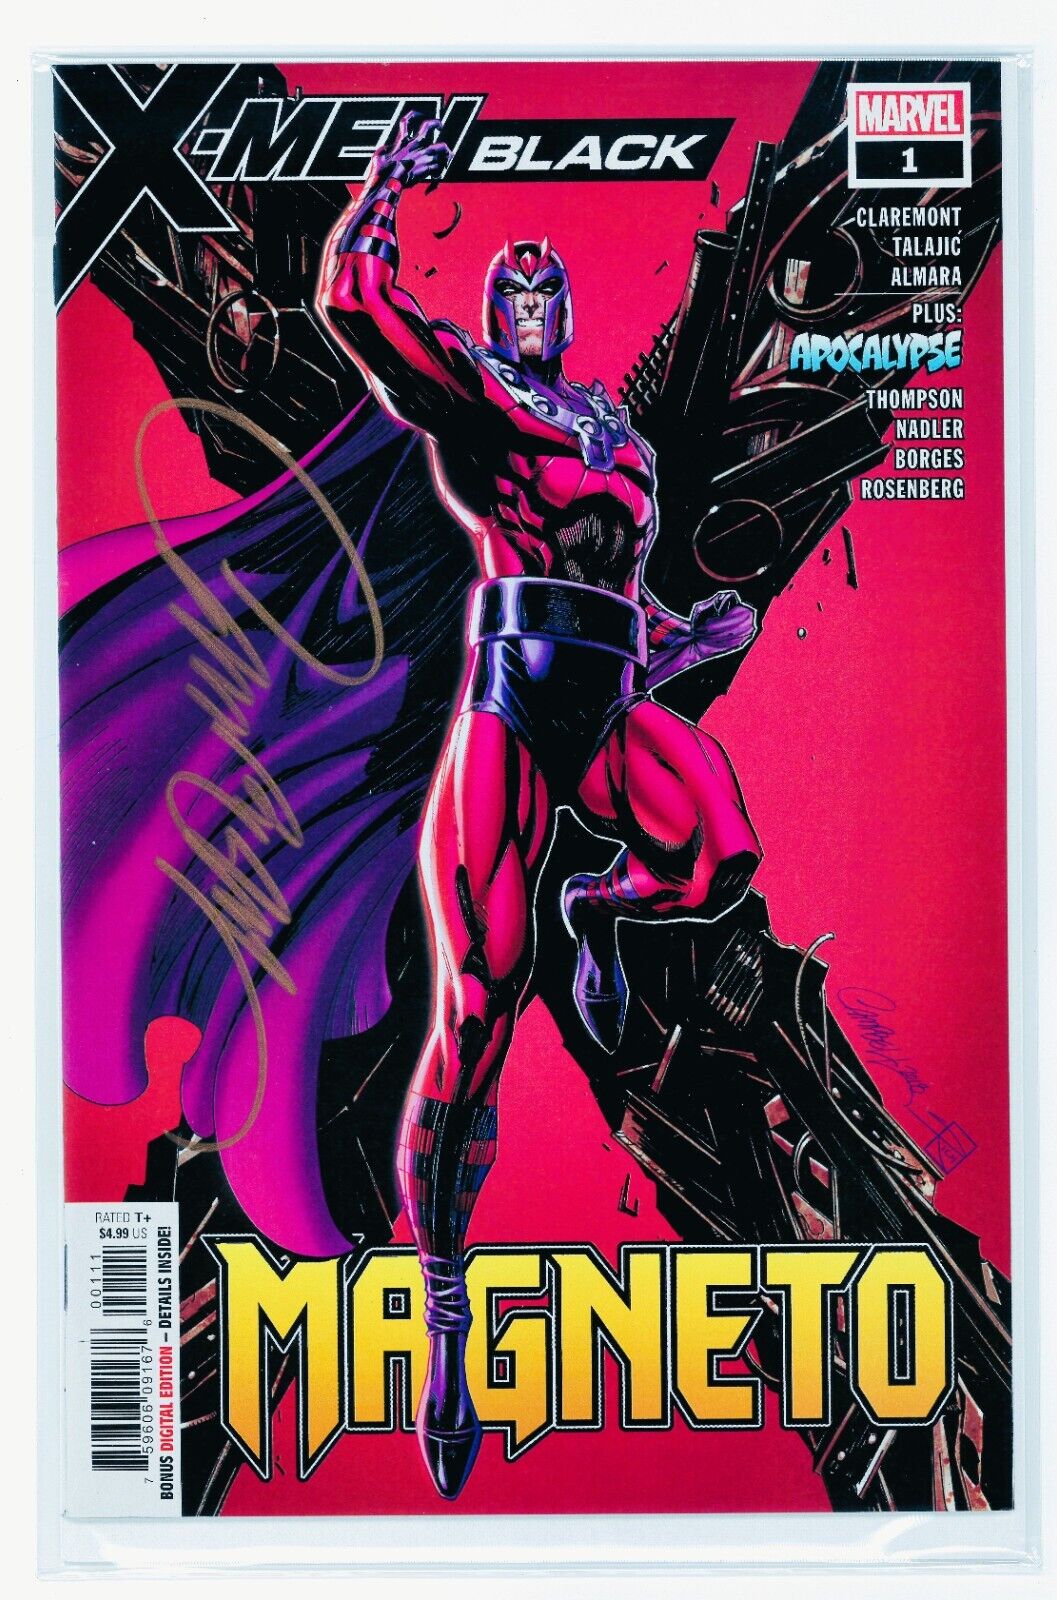 X-Men Black Magneto #1 (Dec 2018, Marvel) Retail Cover, Signed J Scott Campbell